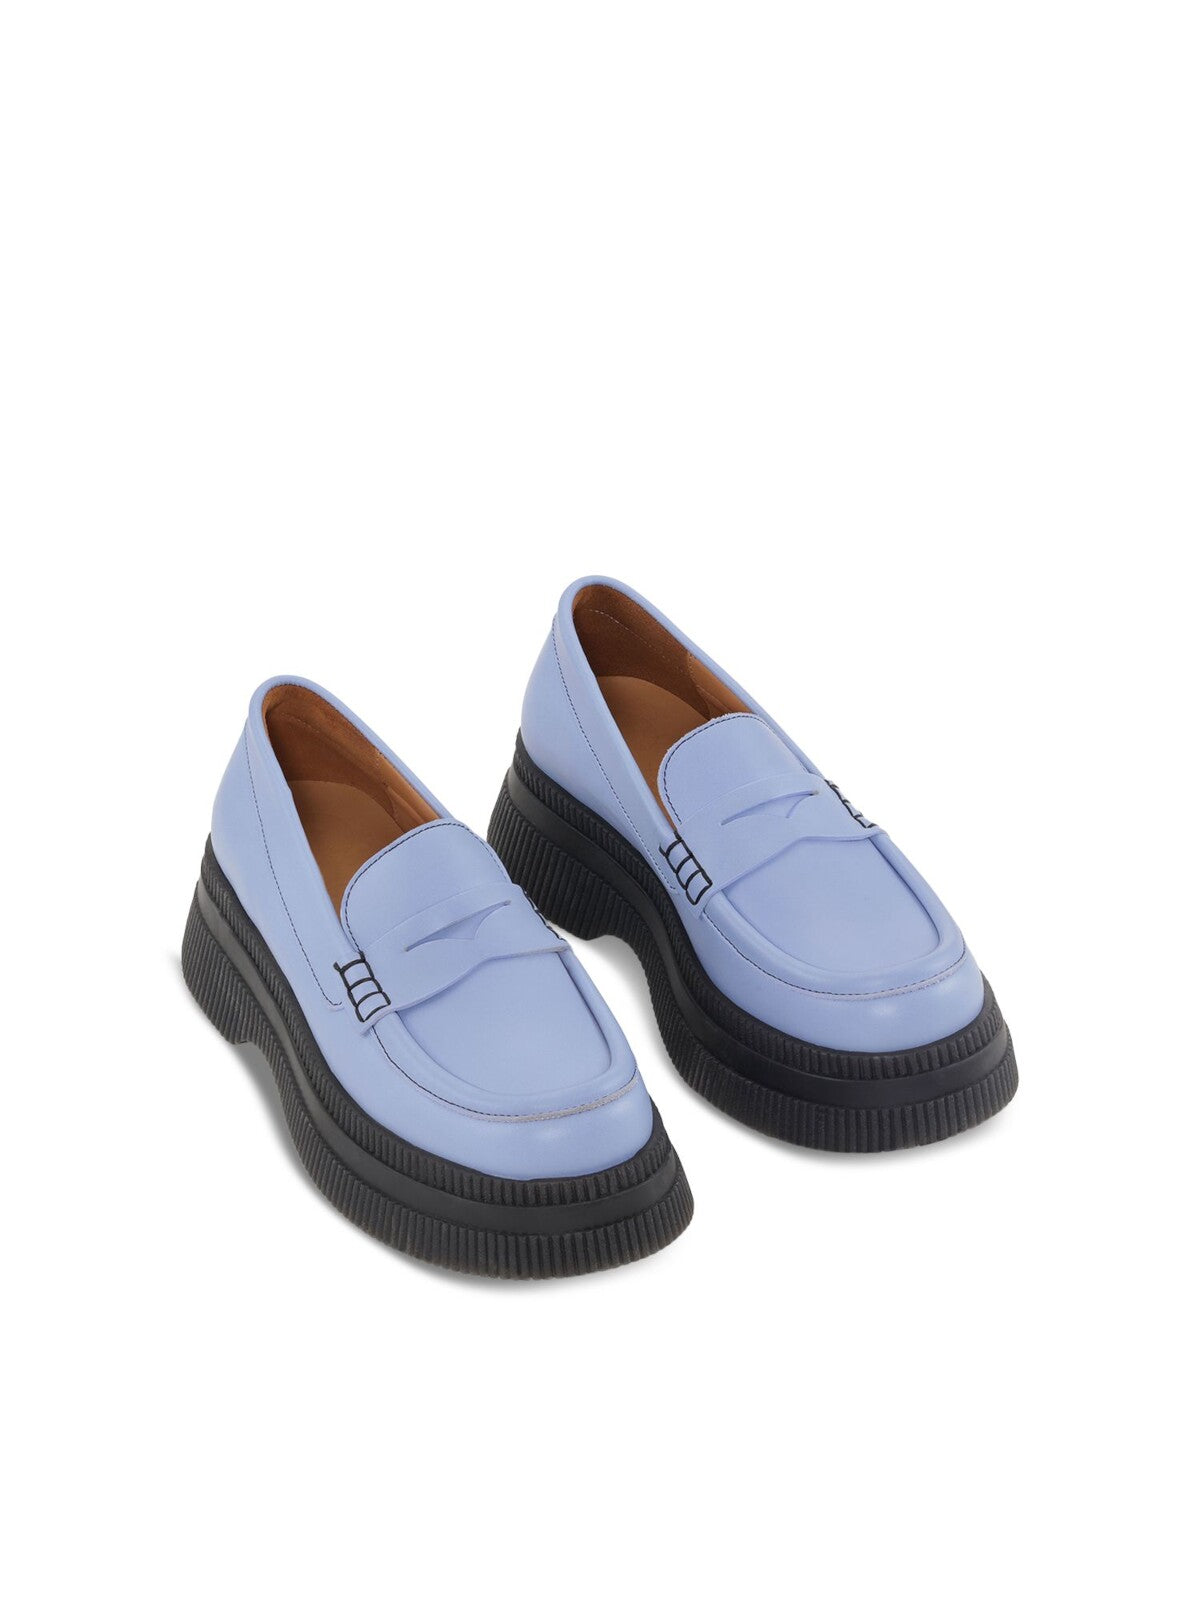 GANNI Womens Blue 2" Platform Comfort Creepers Round Toe Block Heel Slip On Leather Dress Heeled Loafers 36